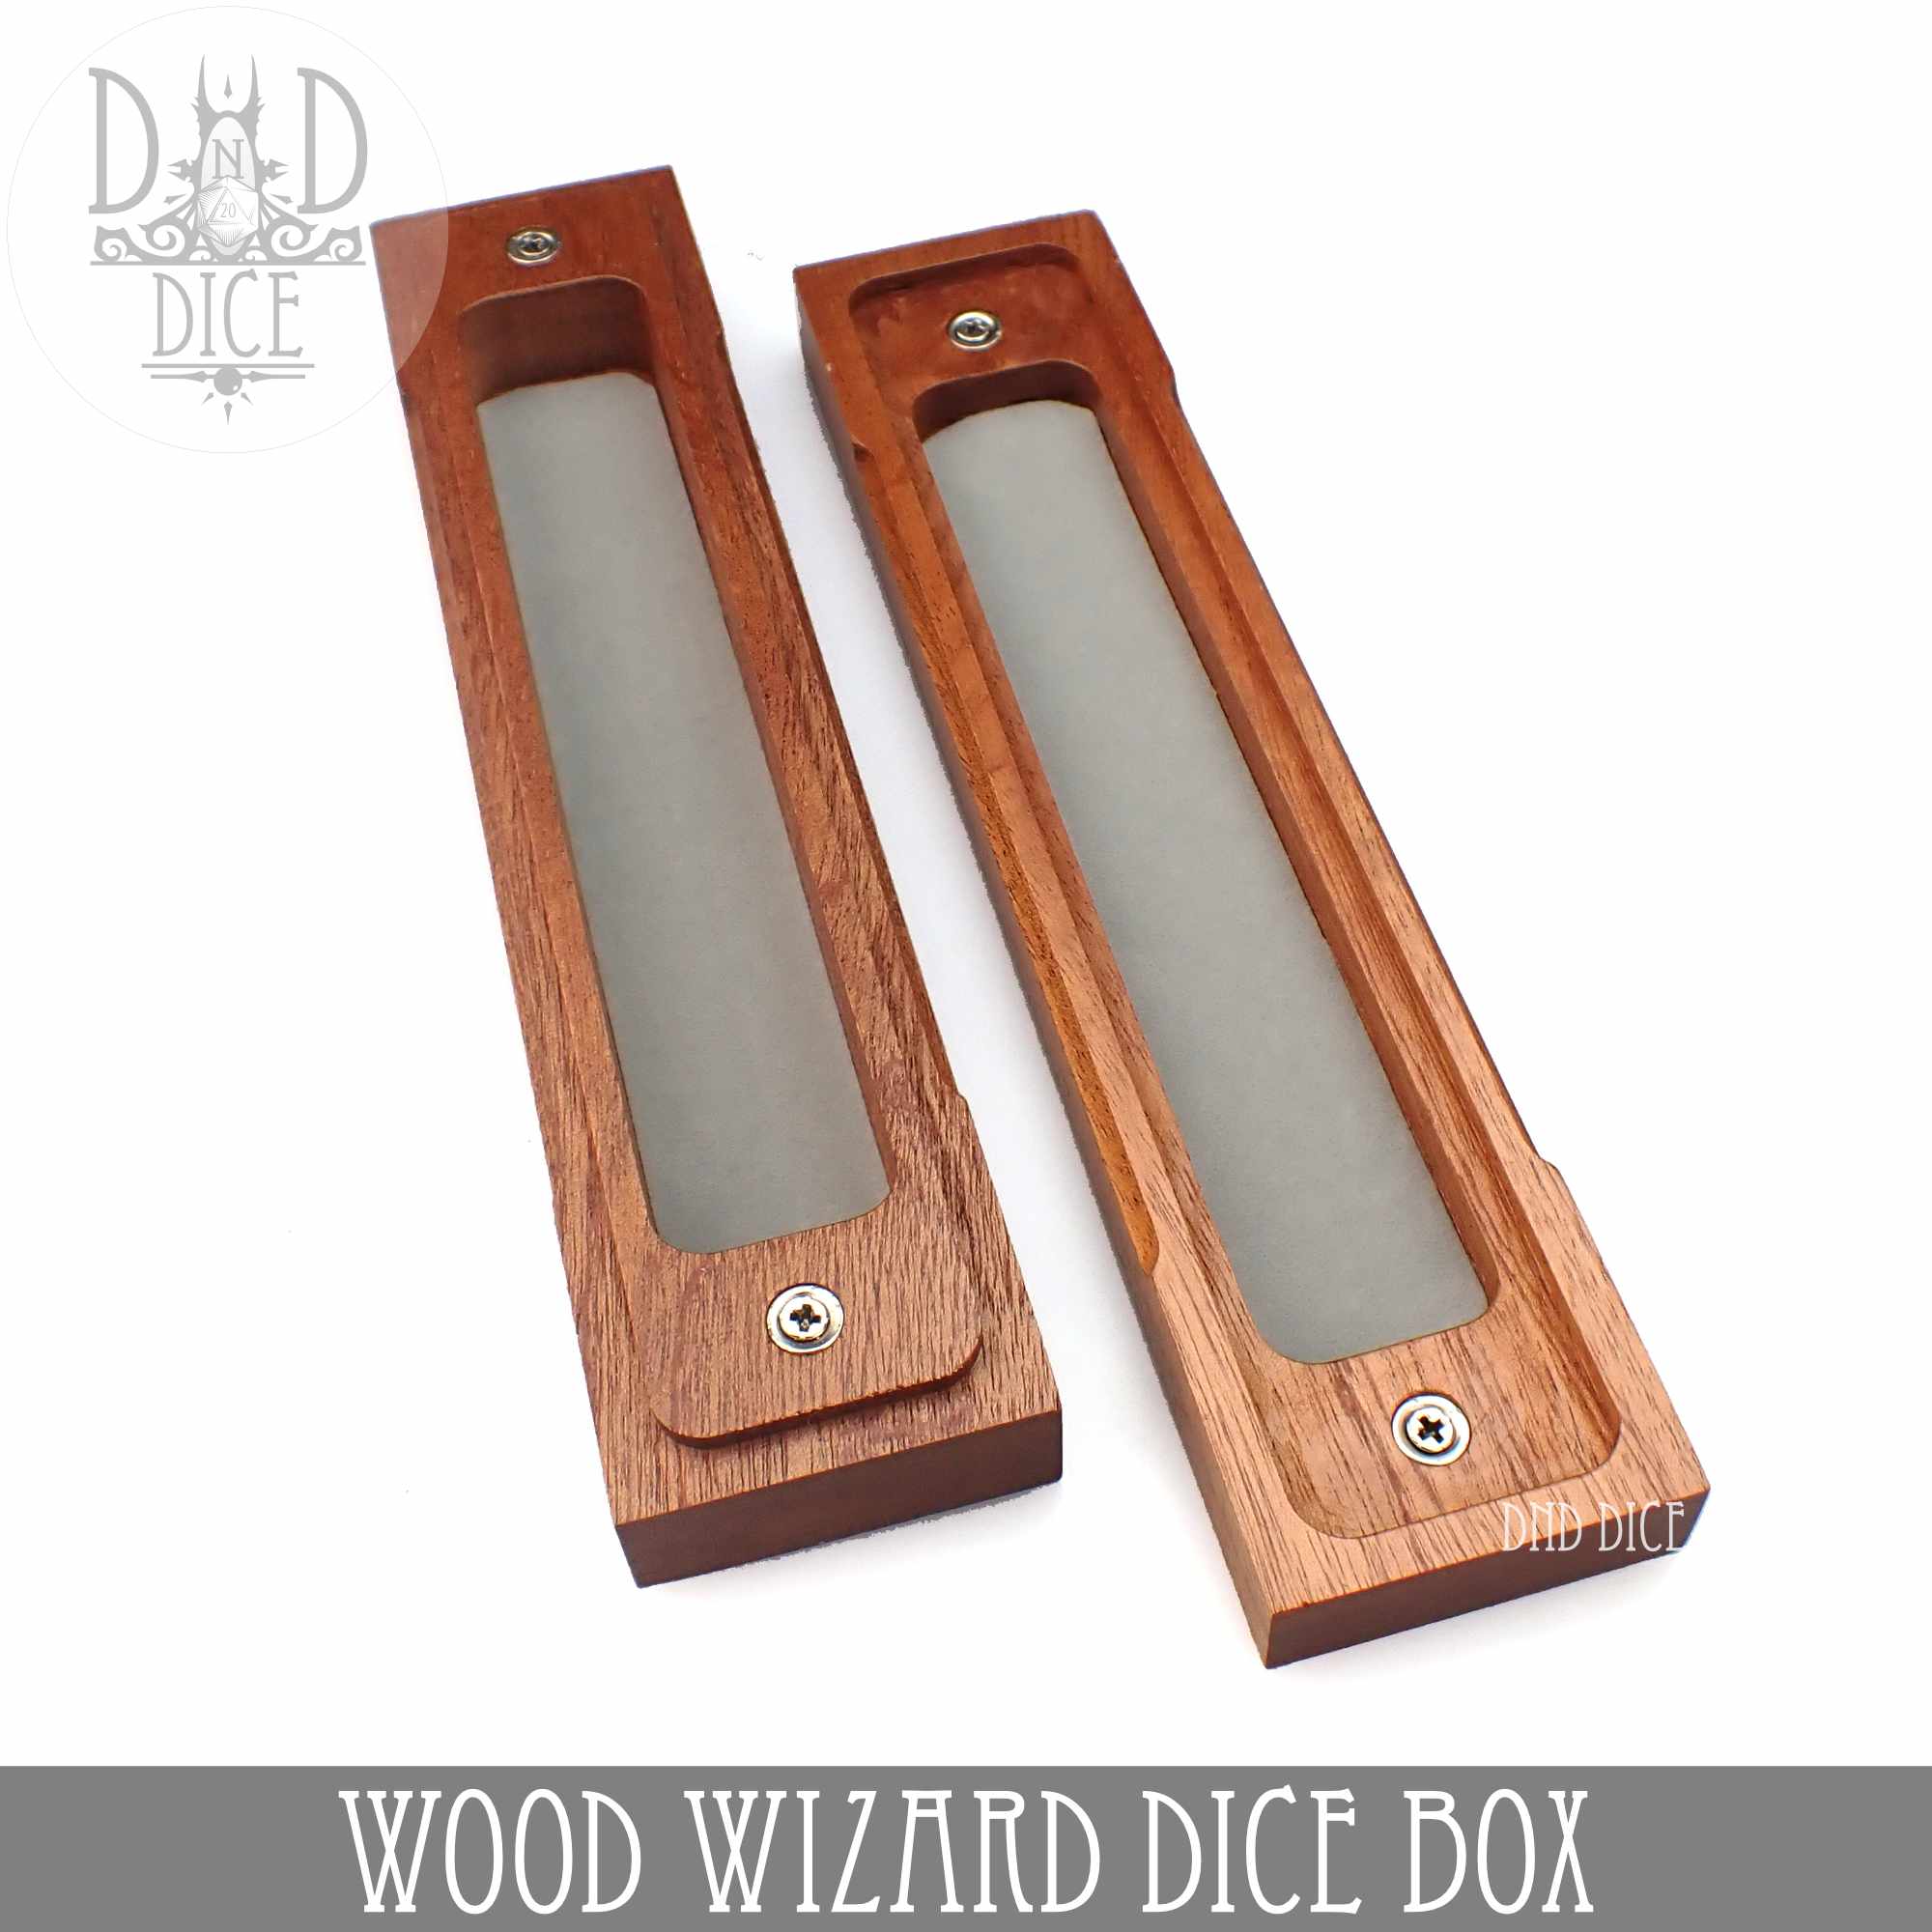 Wood Wizards Dice Box